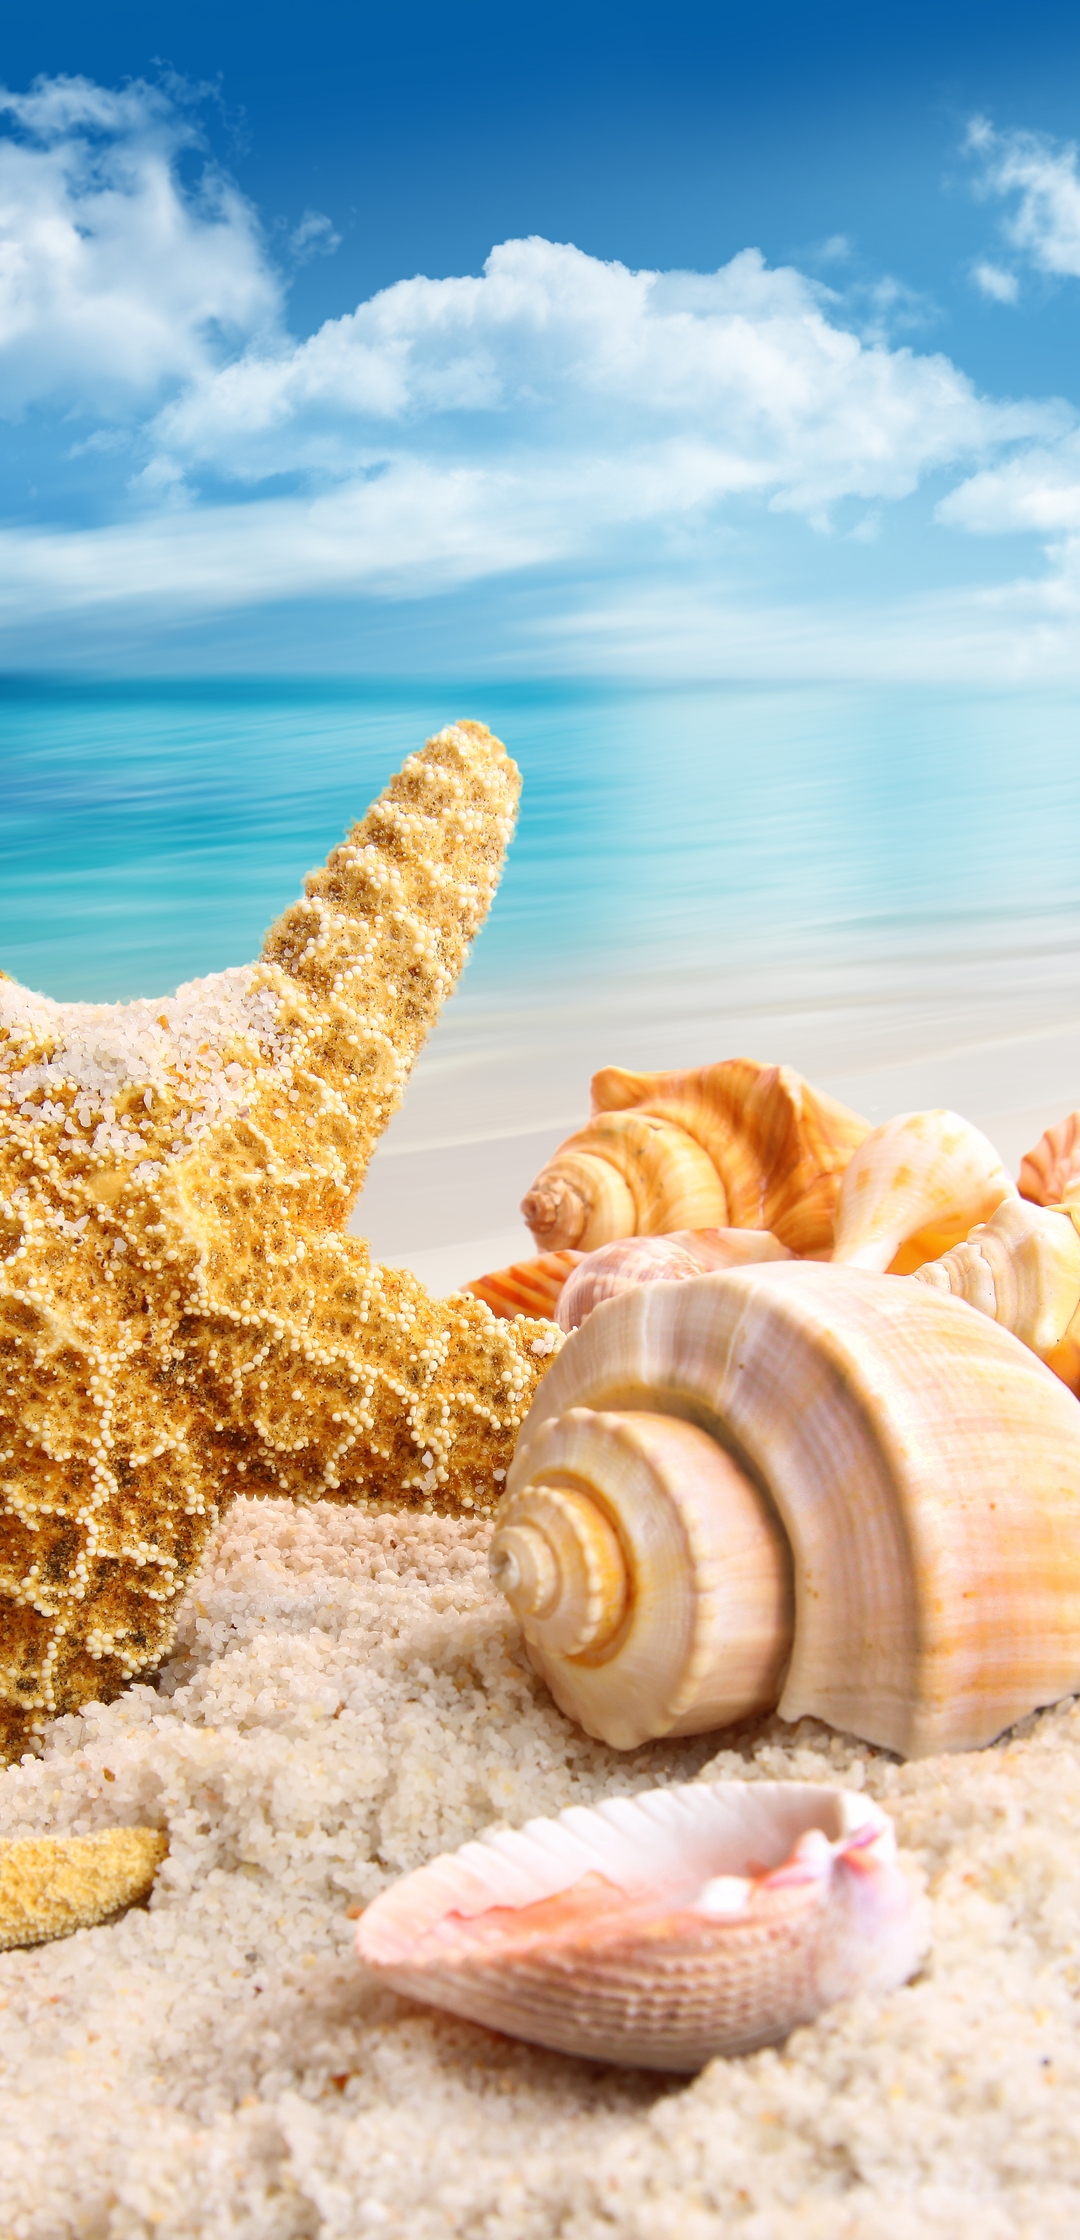 Image: Sea, sand, vacation, starfish, shells, sky